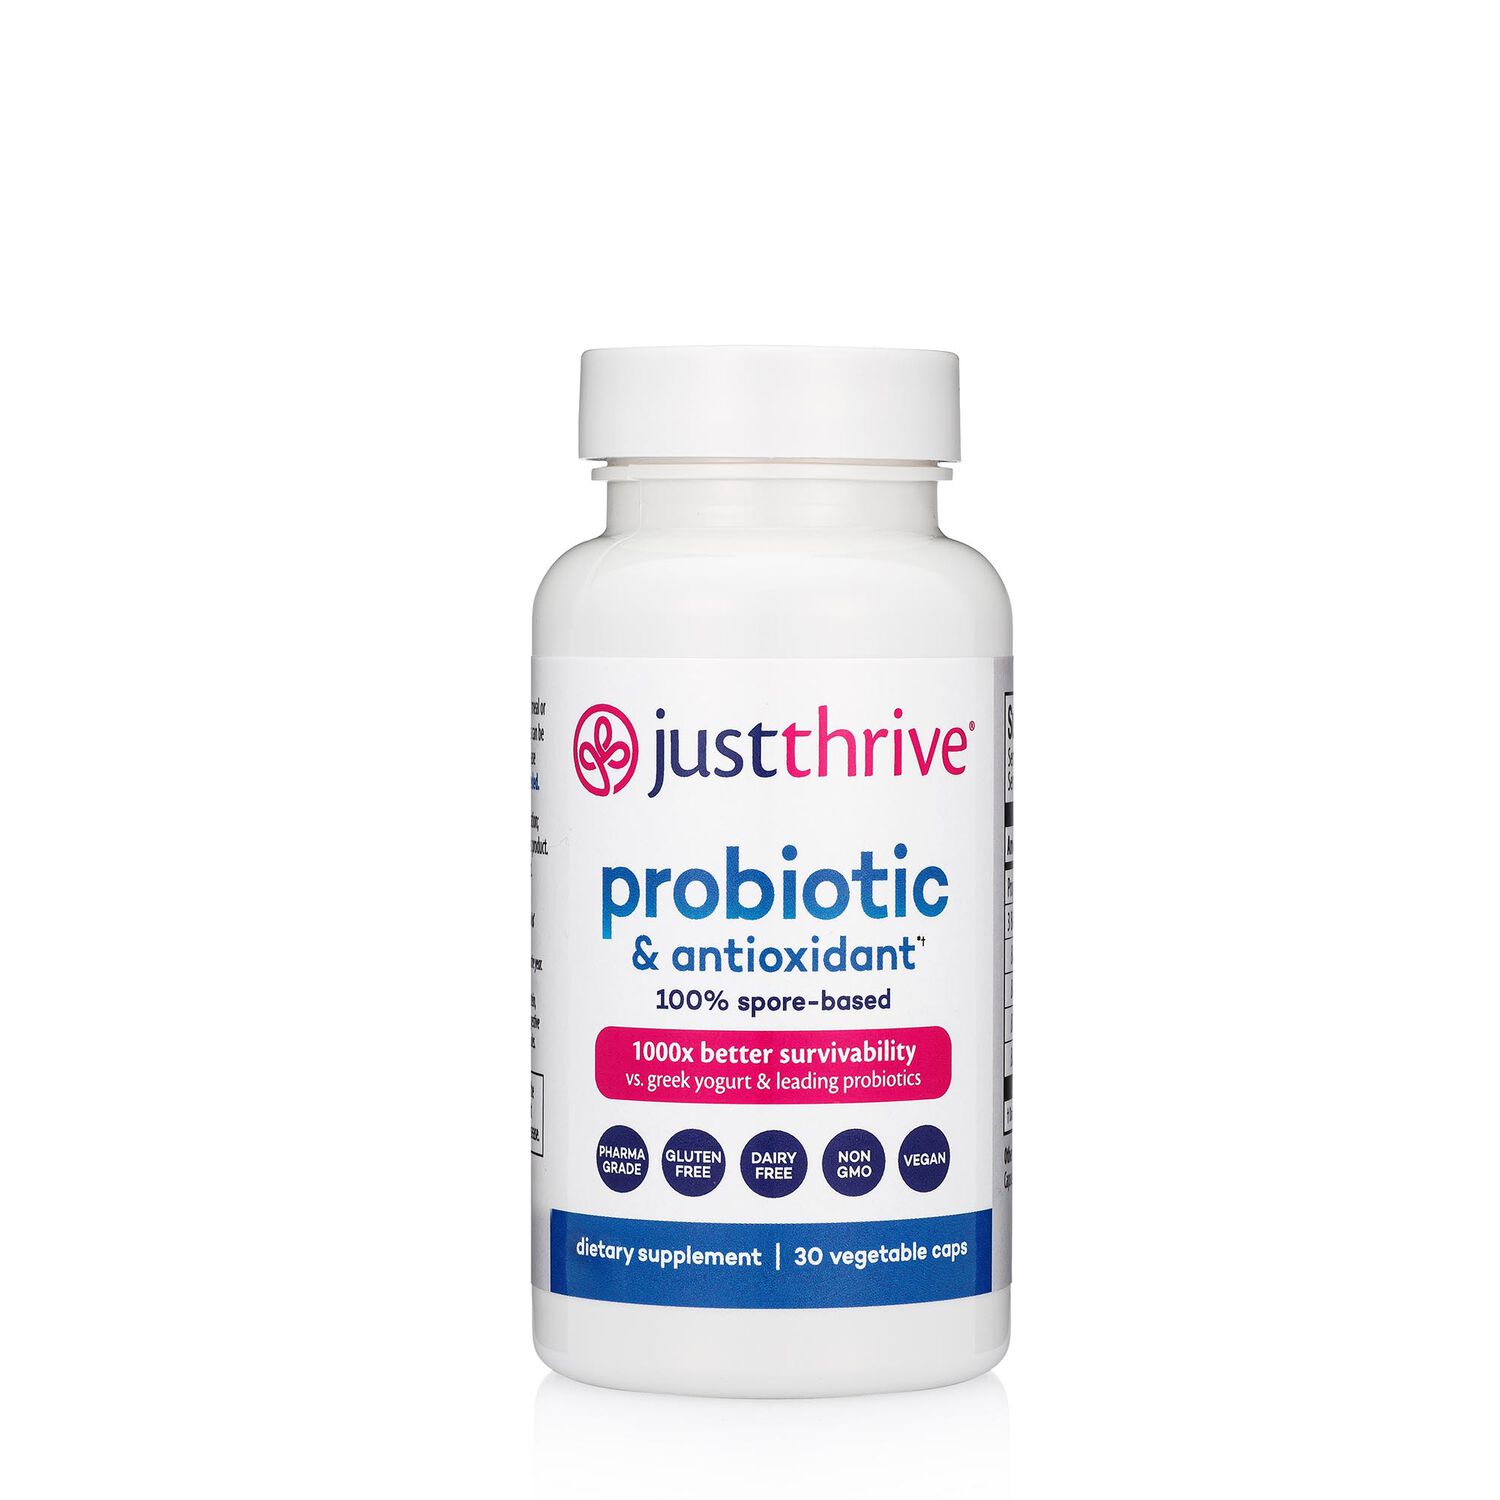 Just Thrive Probiotic & Antioxidant Vegan - 30 Capsules (30 Servings)